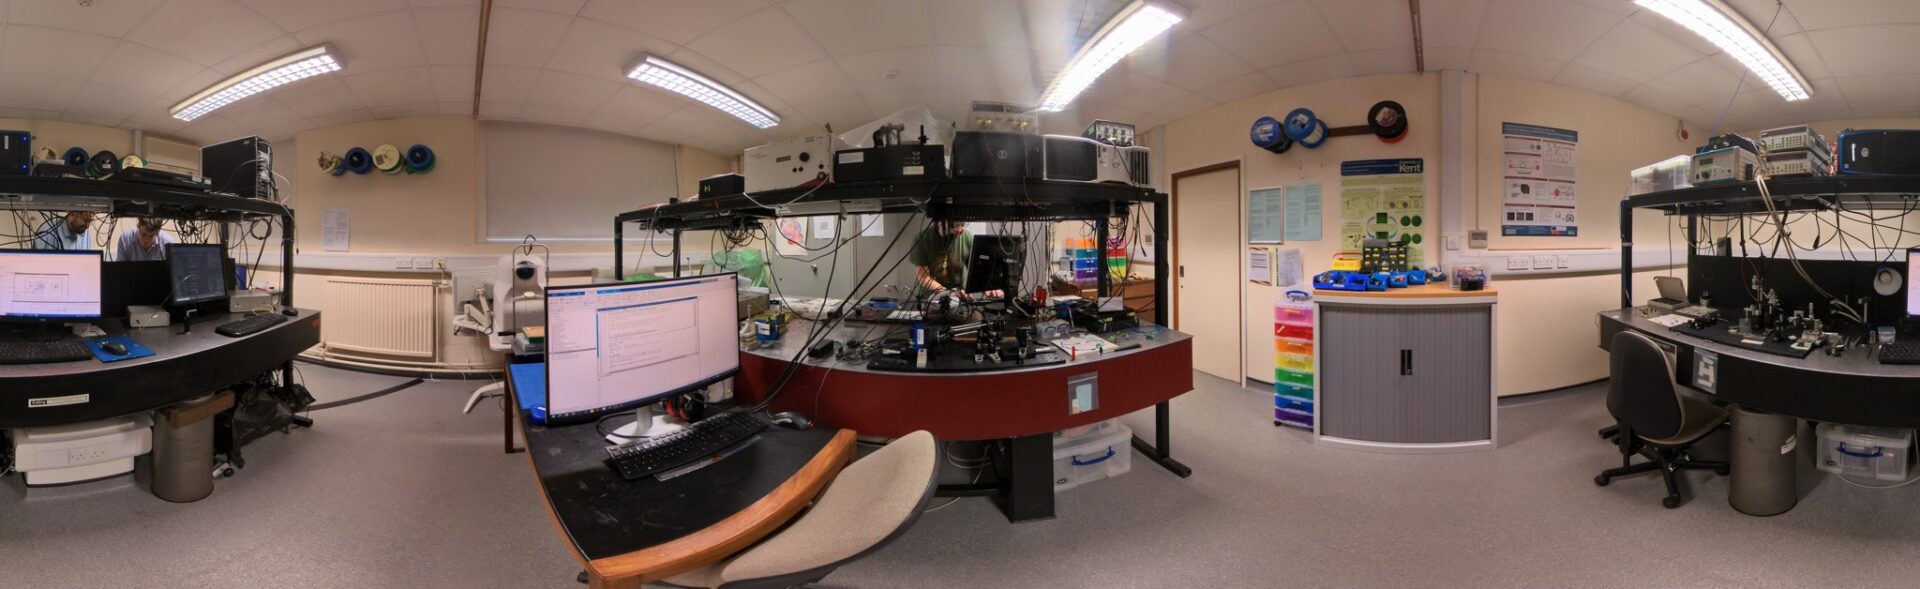 360 image of an optics lab